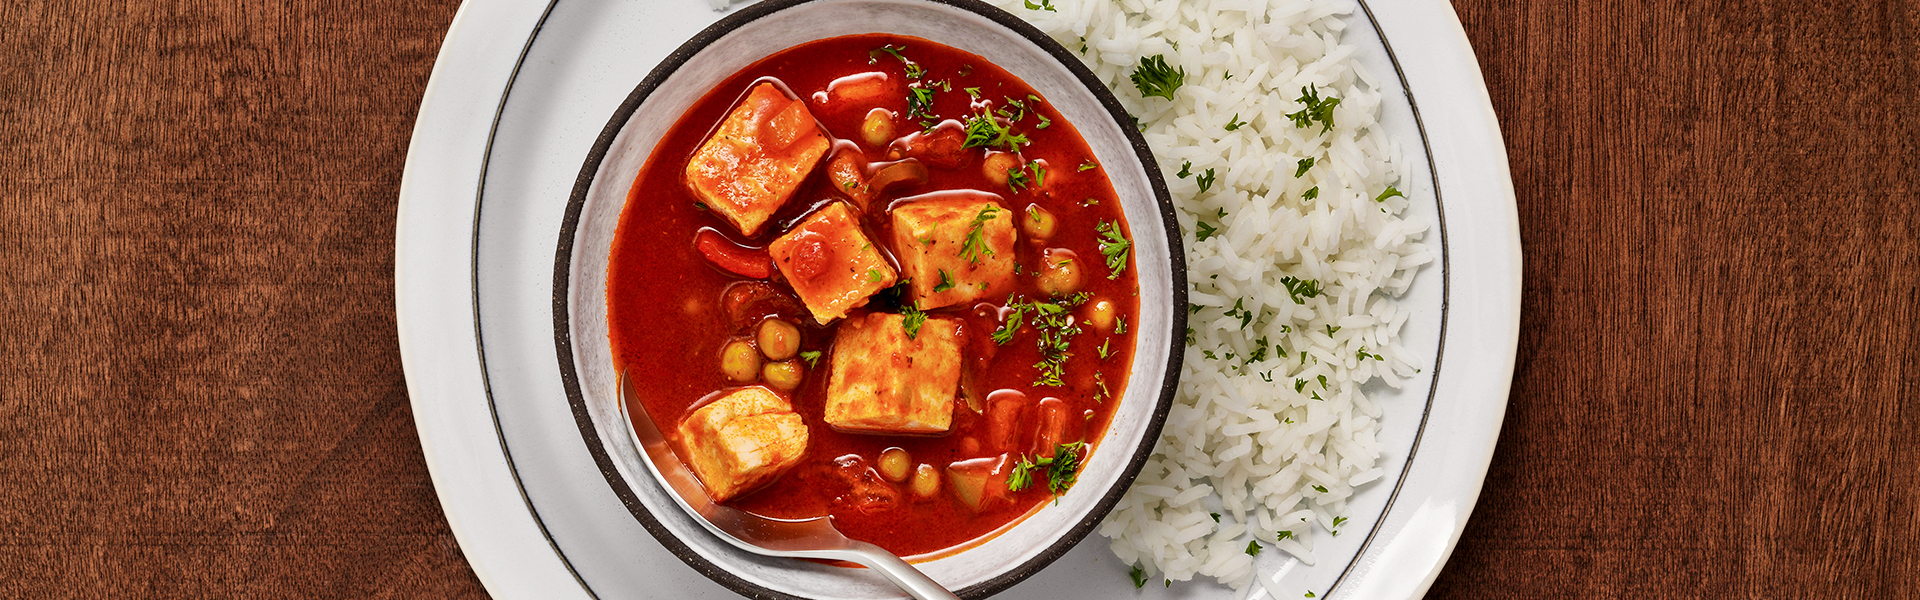 Vegan Chickpea Tofu Dinner